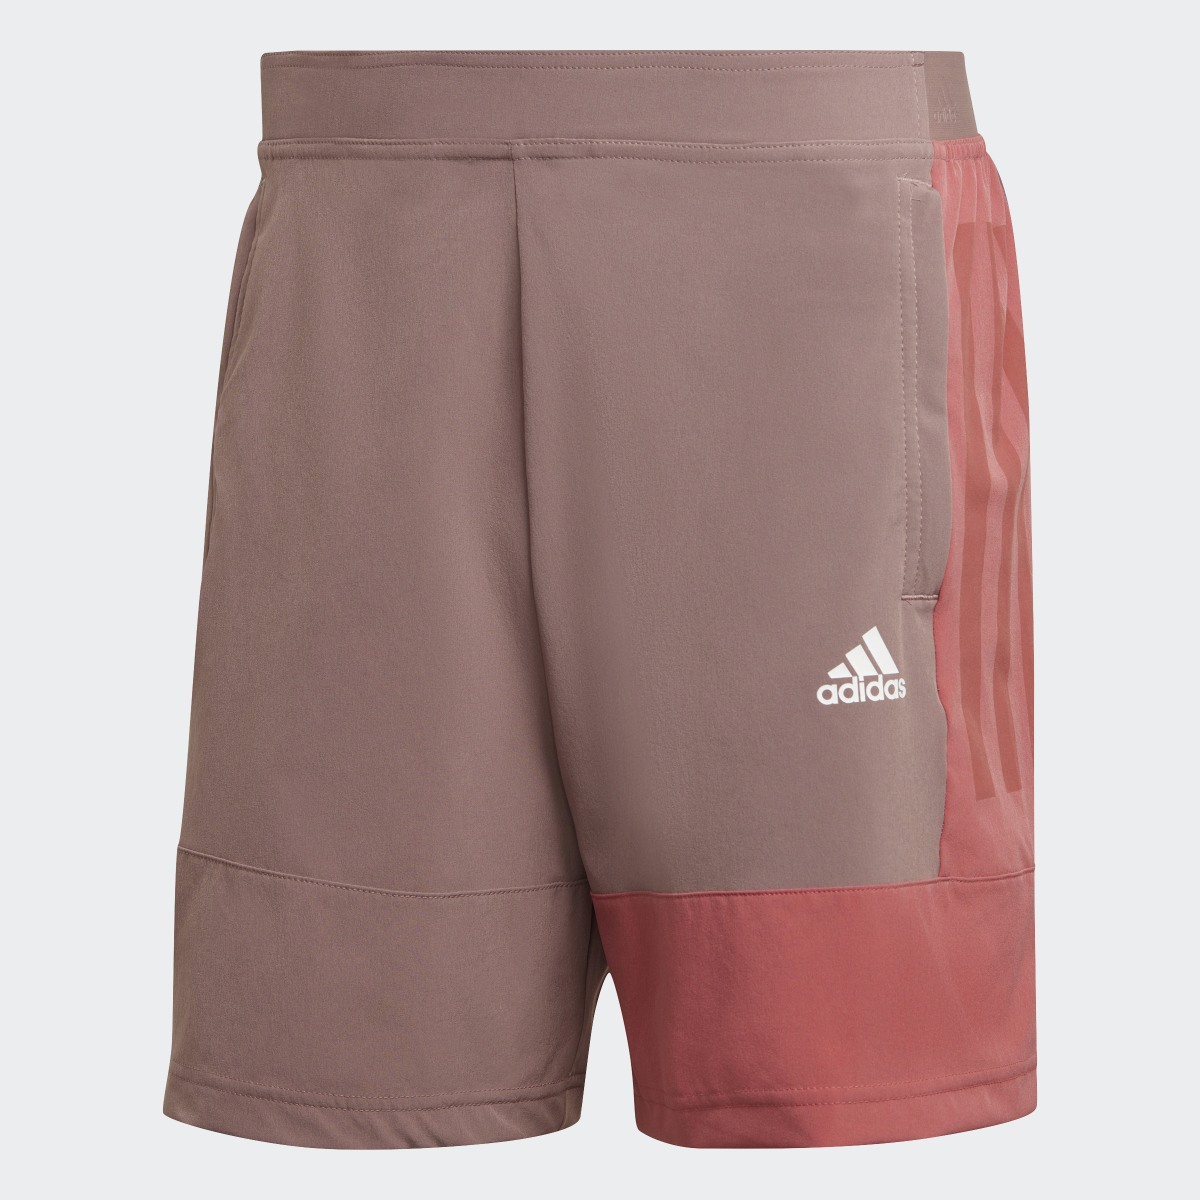 Adidas Training Colourblock Shorts. 4